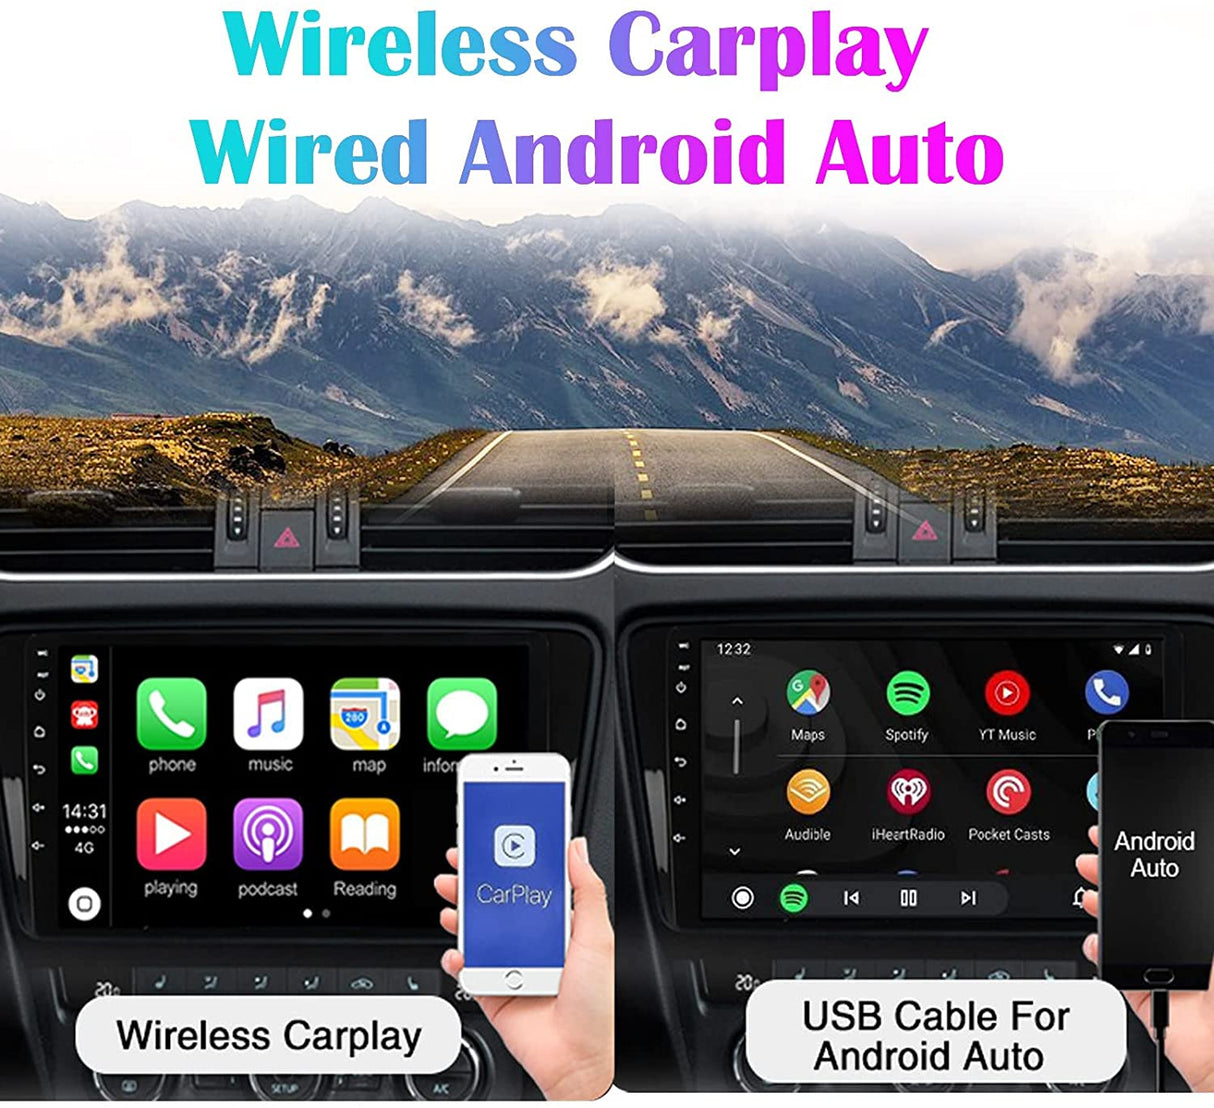 Binize 10Inch wireless CarPlay car radio with phone mirroring app